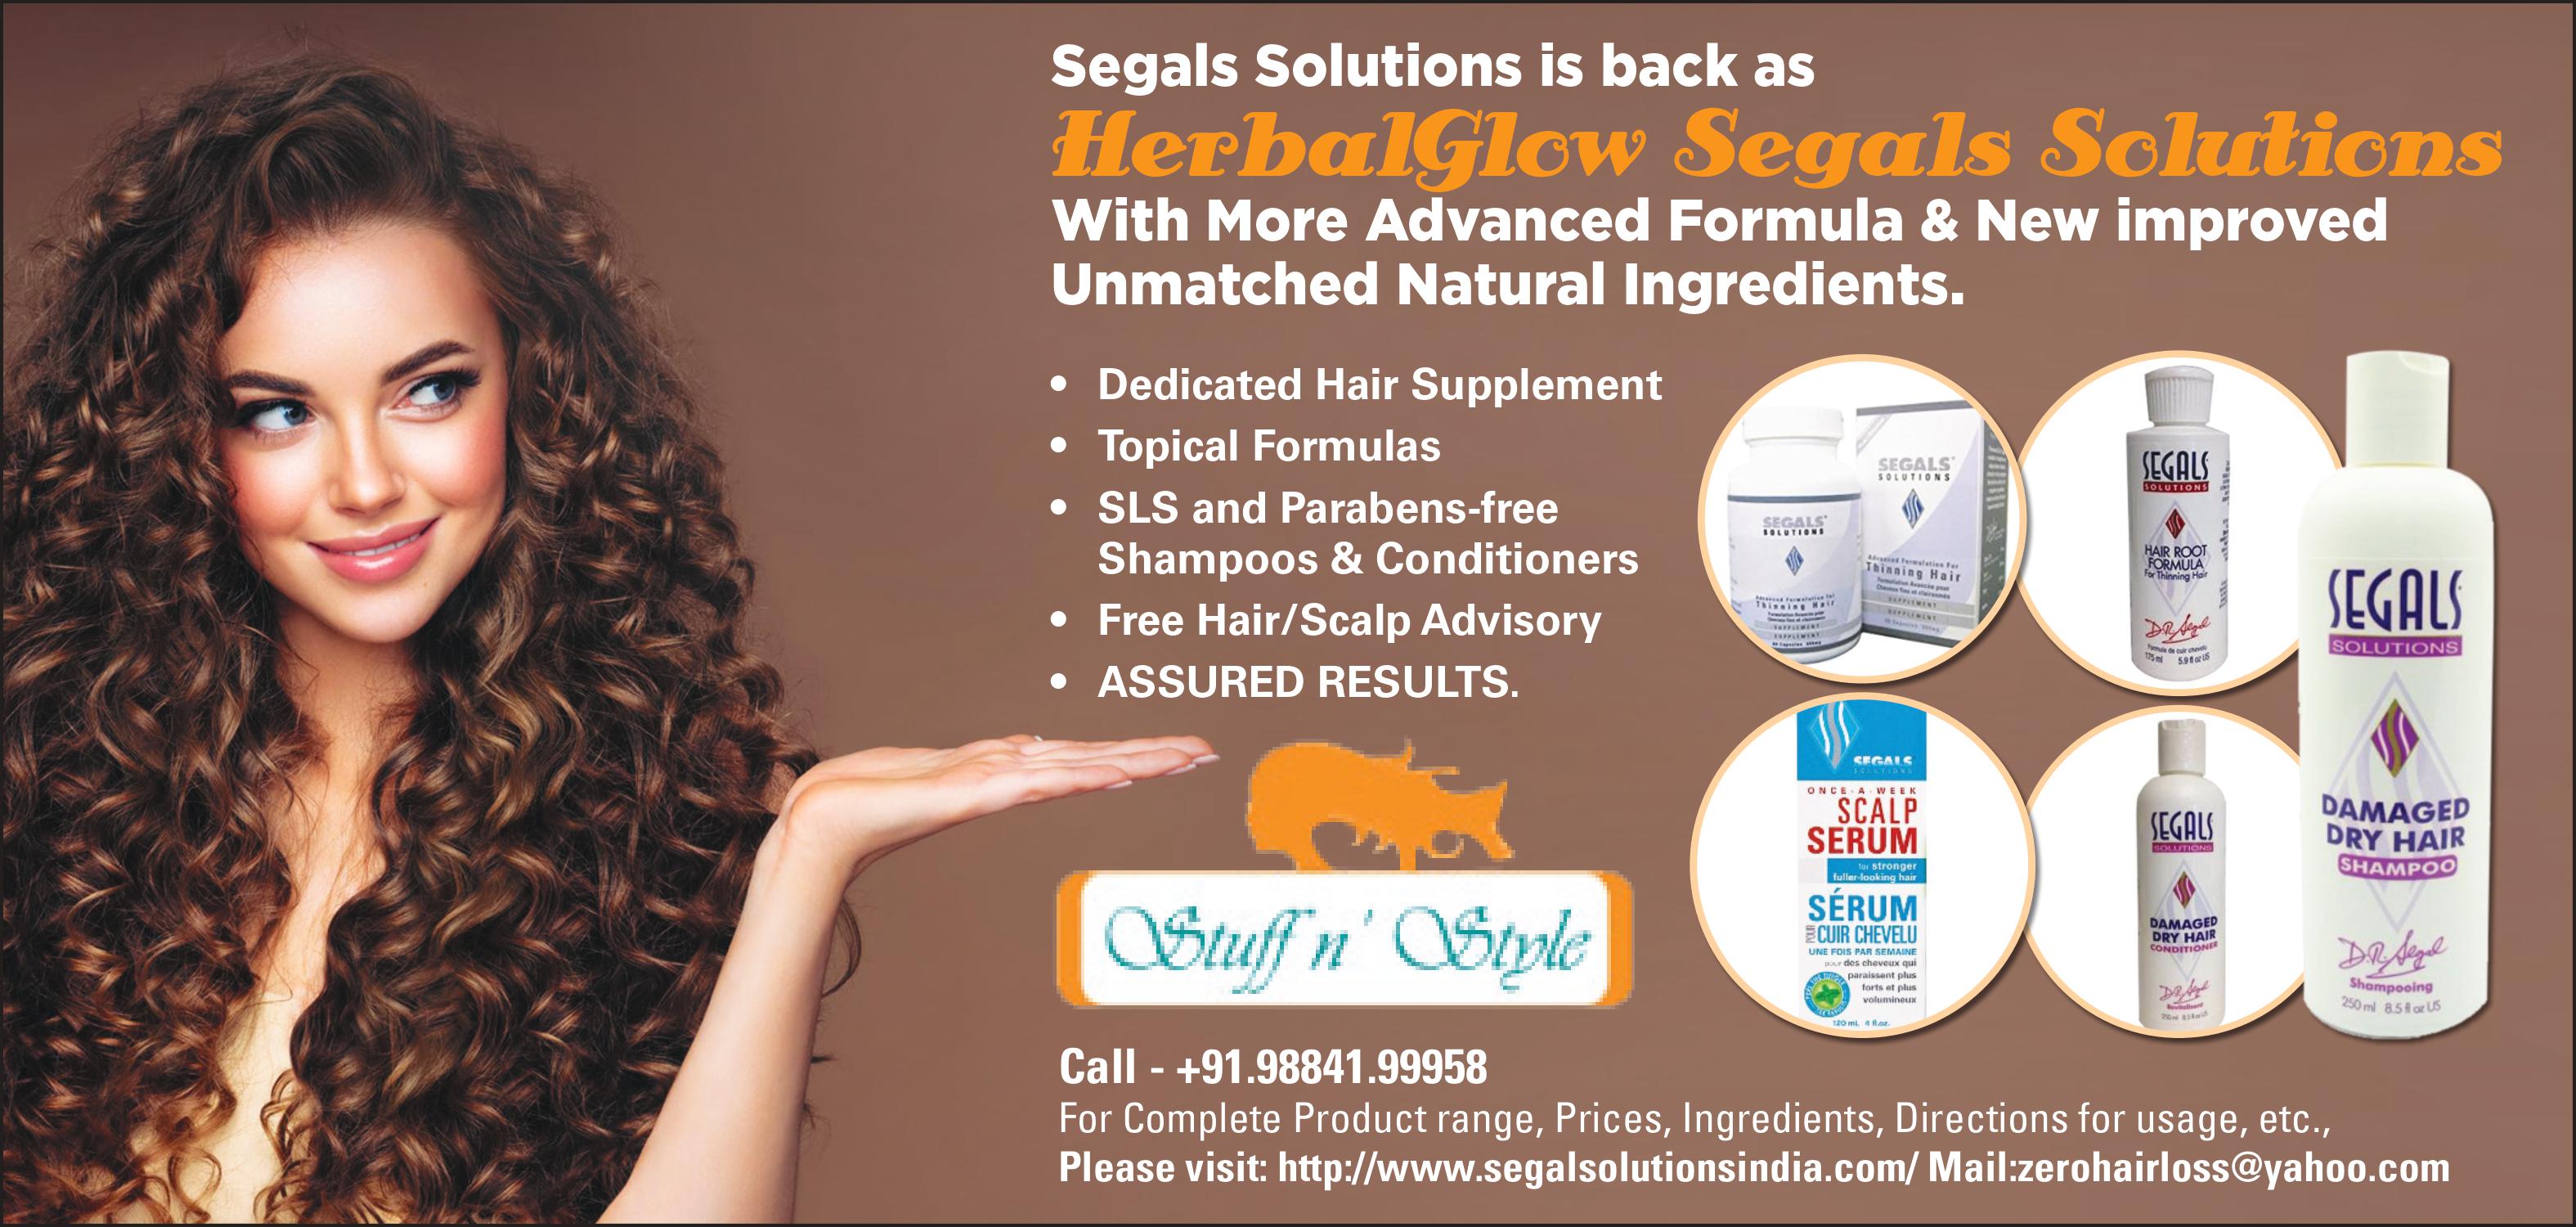 HerbalGlow Segals Solutions (@SegalsSolutions) / Twitter